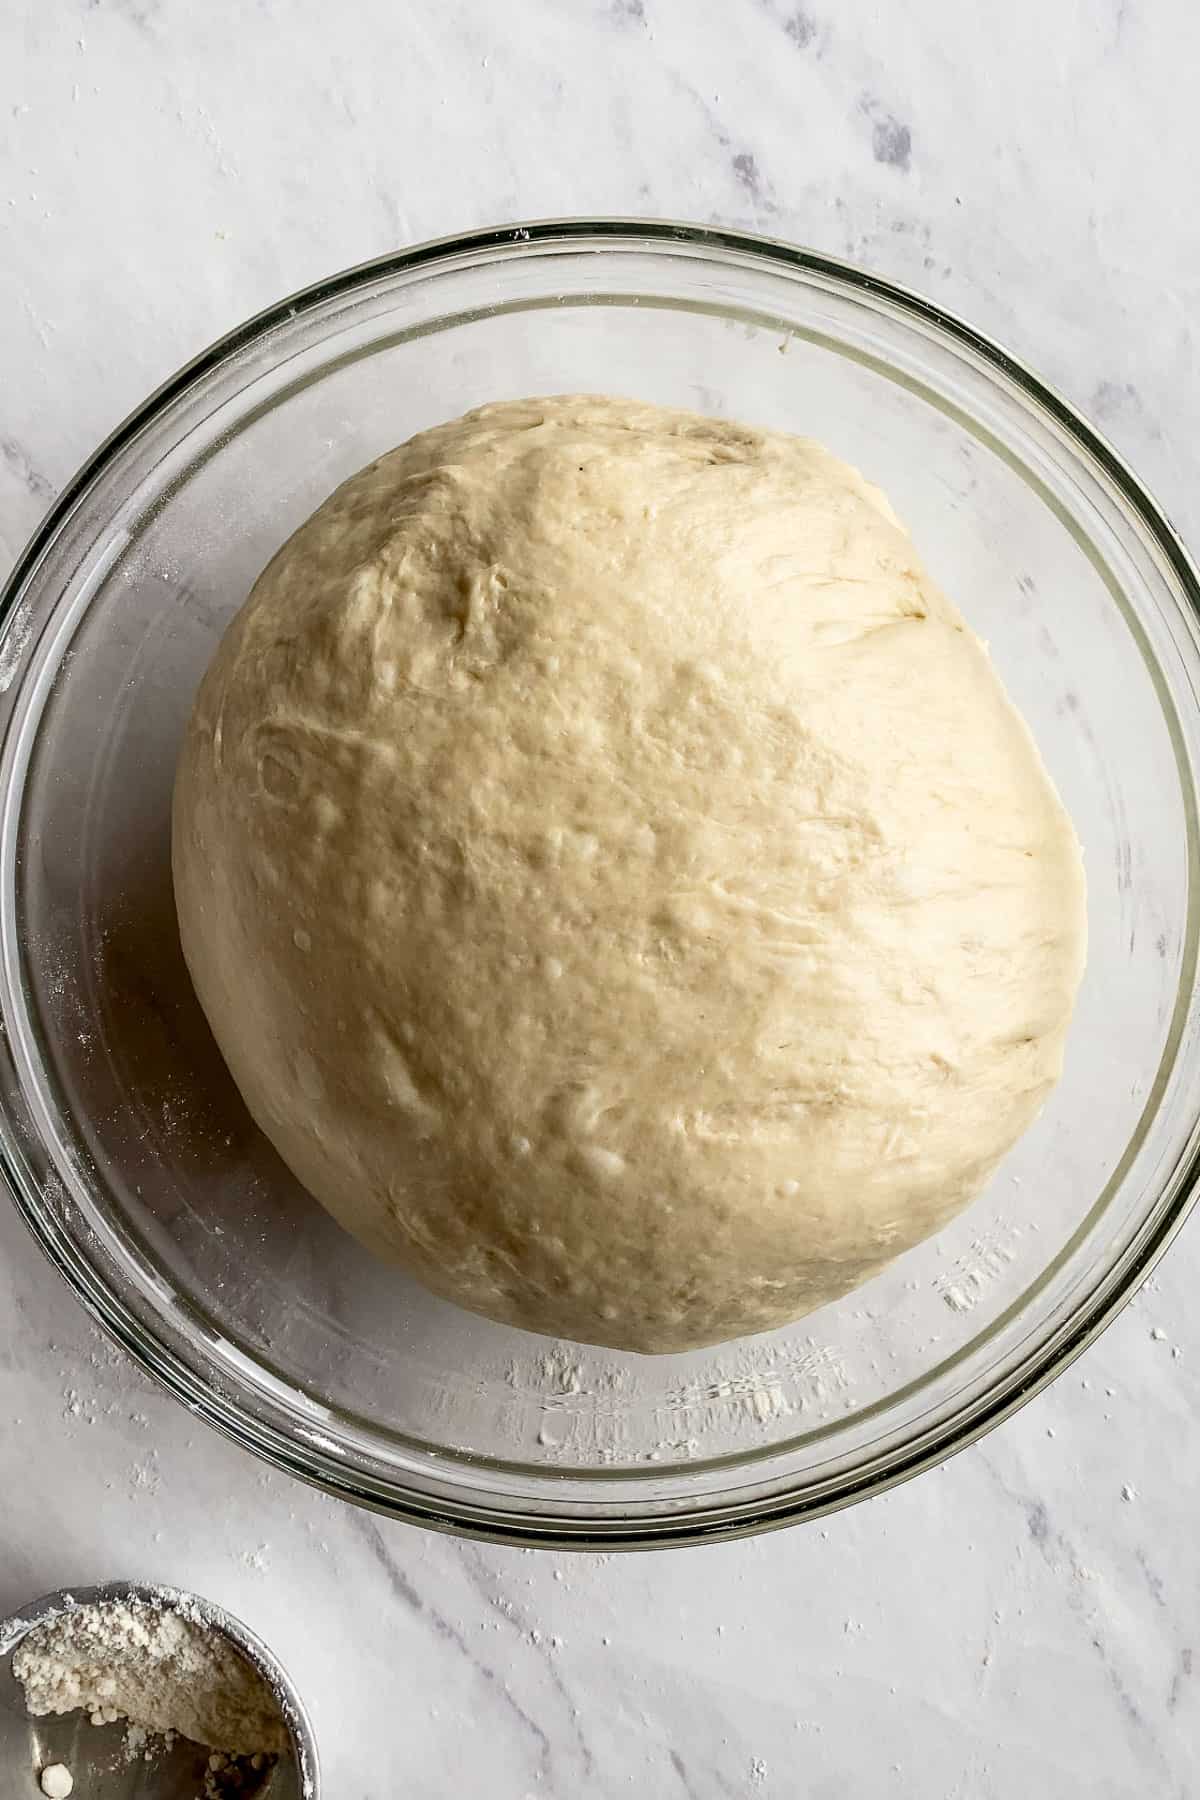 pogaca dough